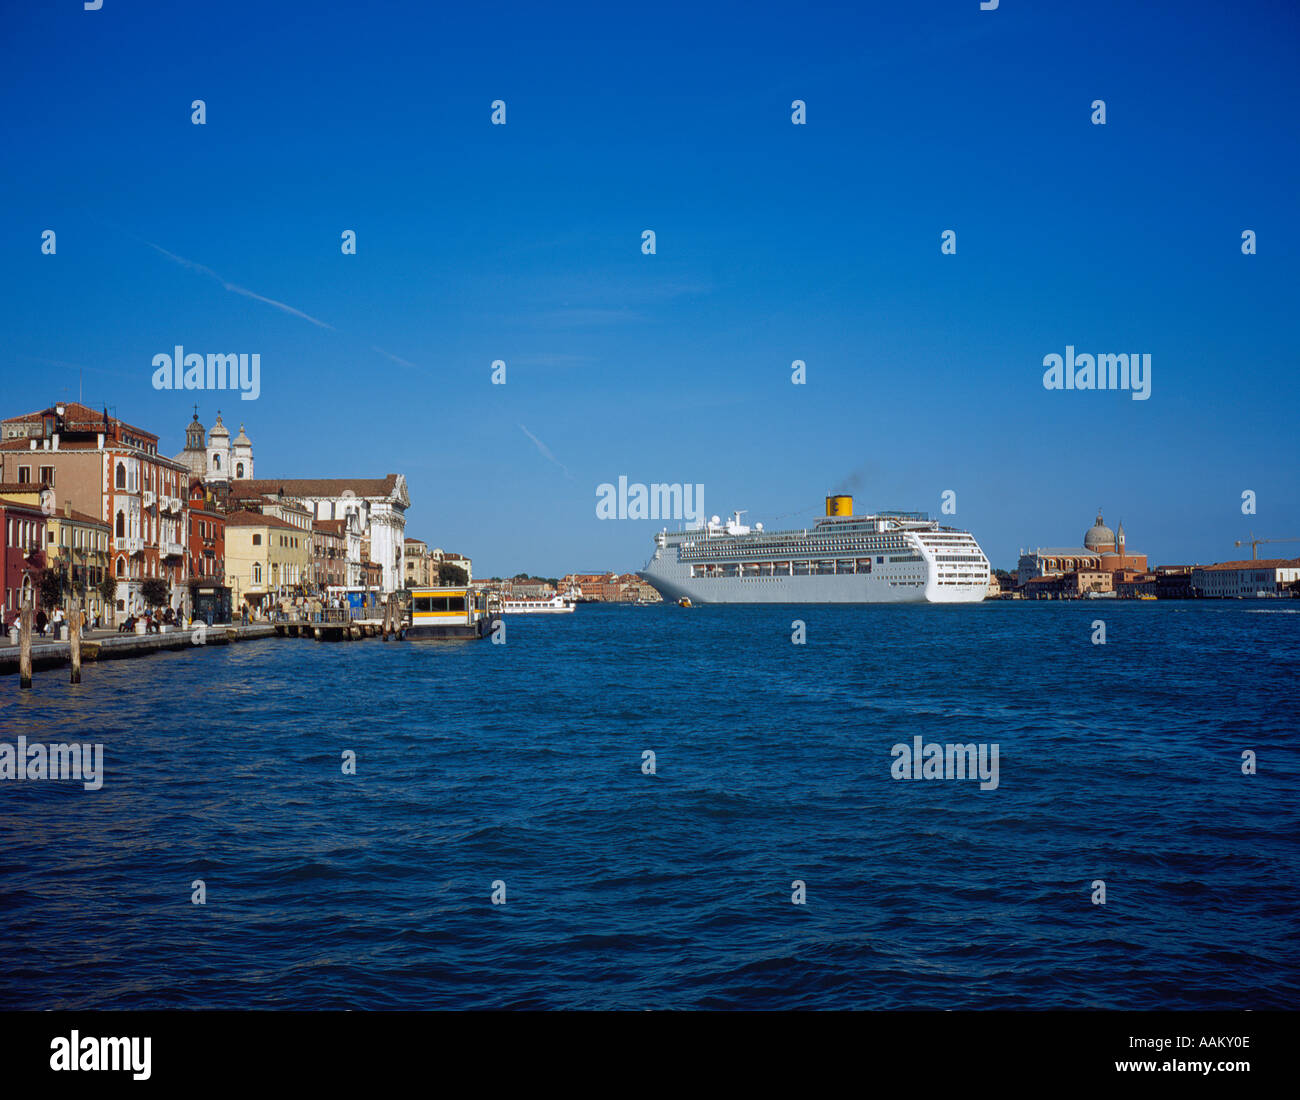 ocean liner at Canale della Giudecca Zattere Fondaco Zattere, Venice, UNESCO World Heritage Site,  Italy, Europe. Photo by Willy Matheisl Stock Photo